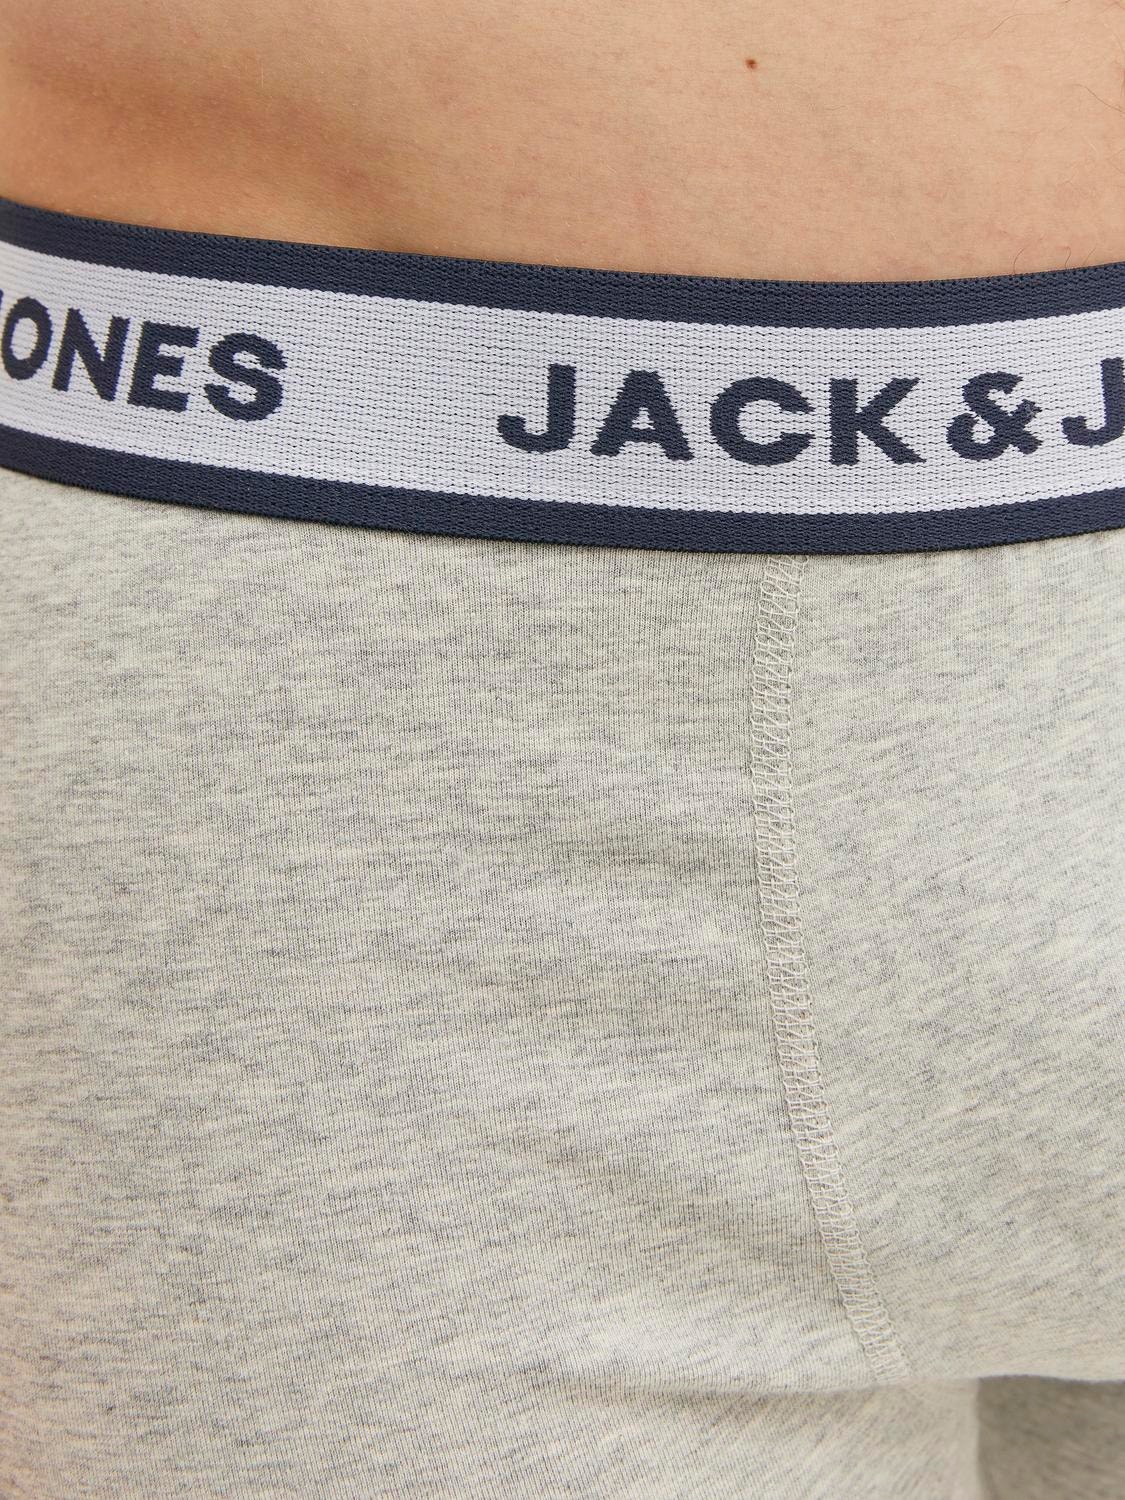 Jack & Jones 3-pack Boxer briefs -Light Grey Melange - 12229576